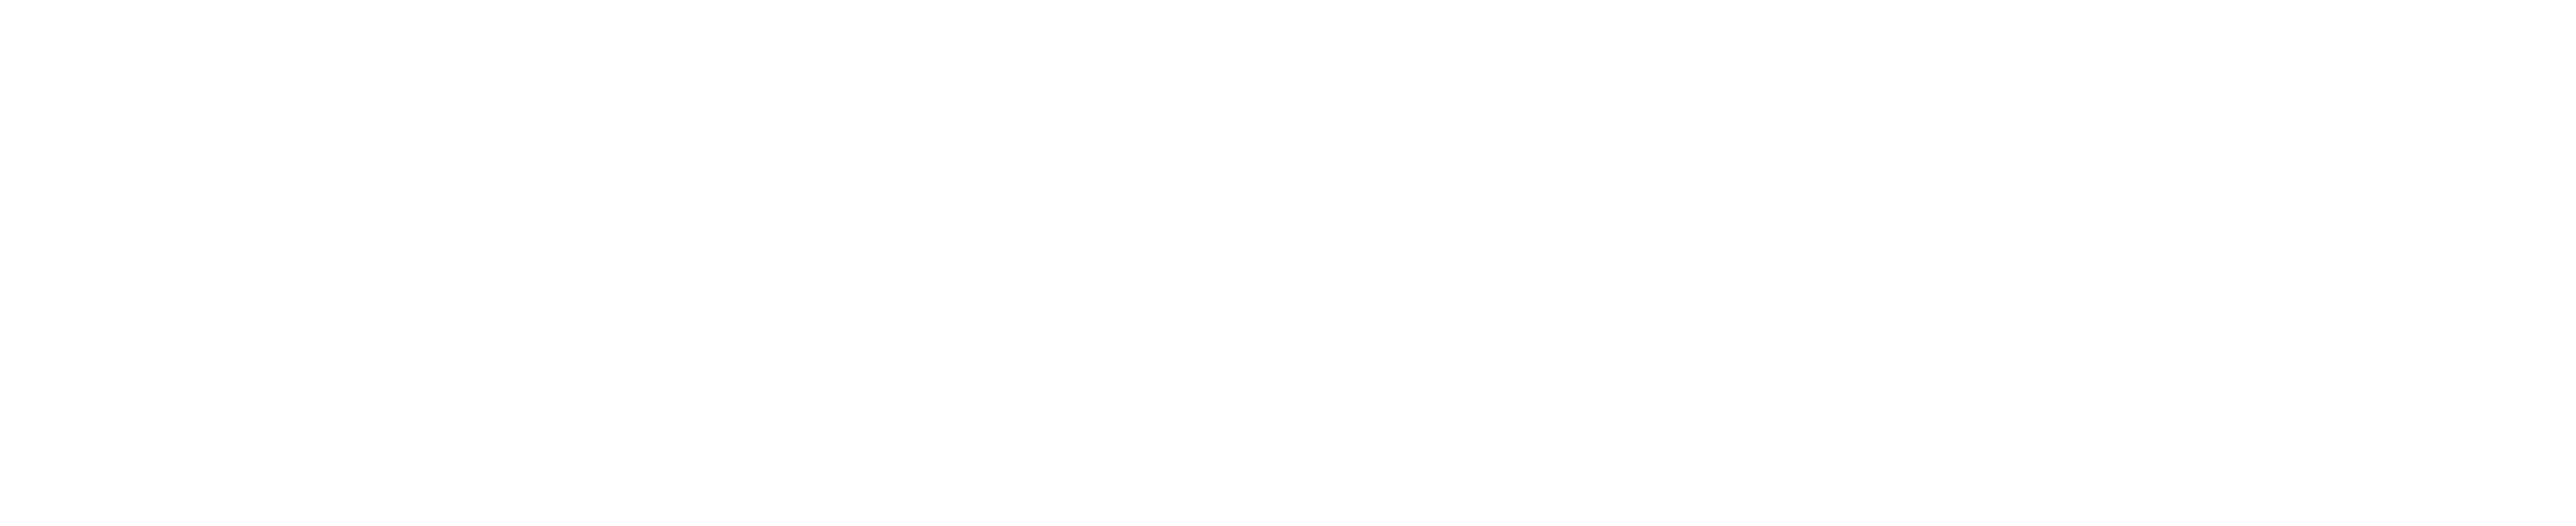 Atlanta Journal-Constitution Logo